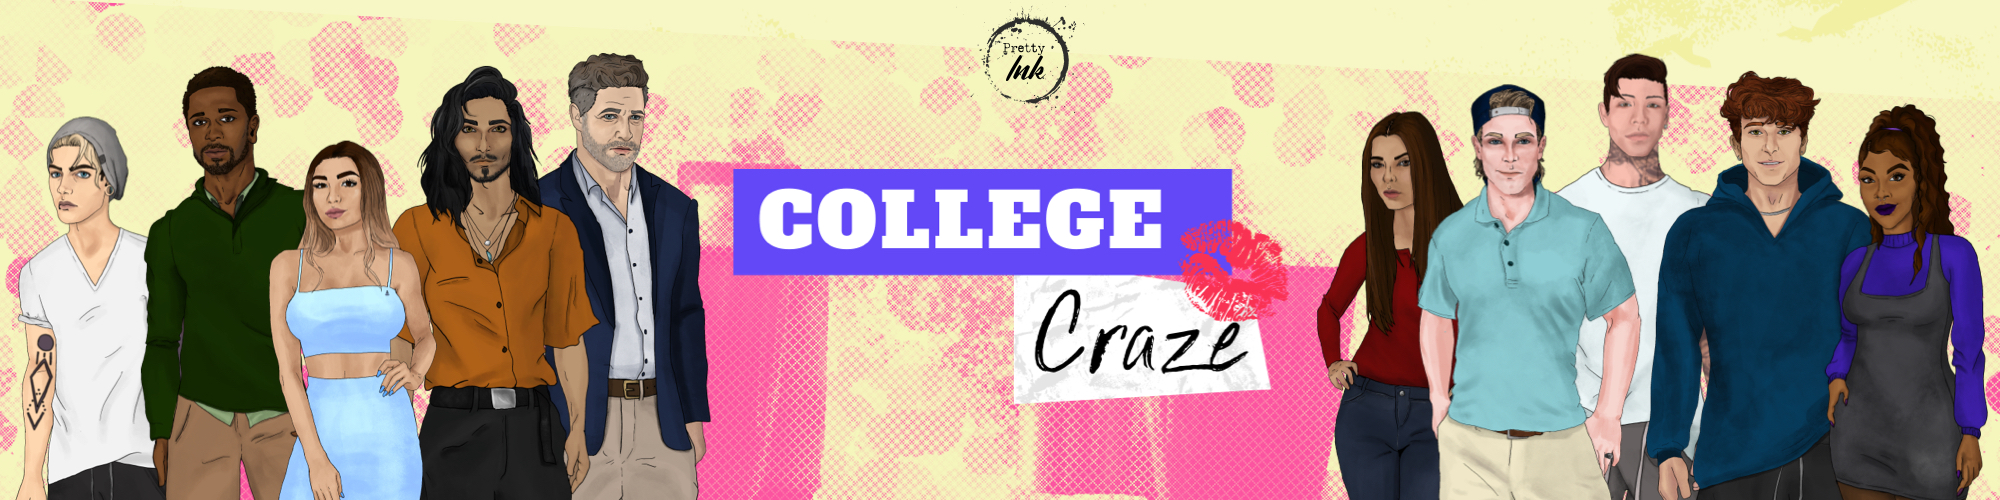 College Craze [v0.1] main image